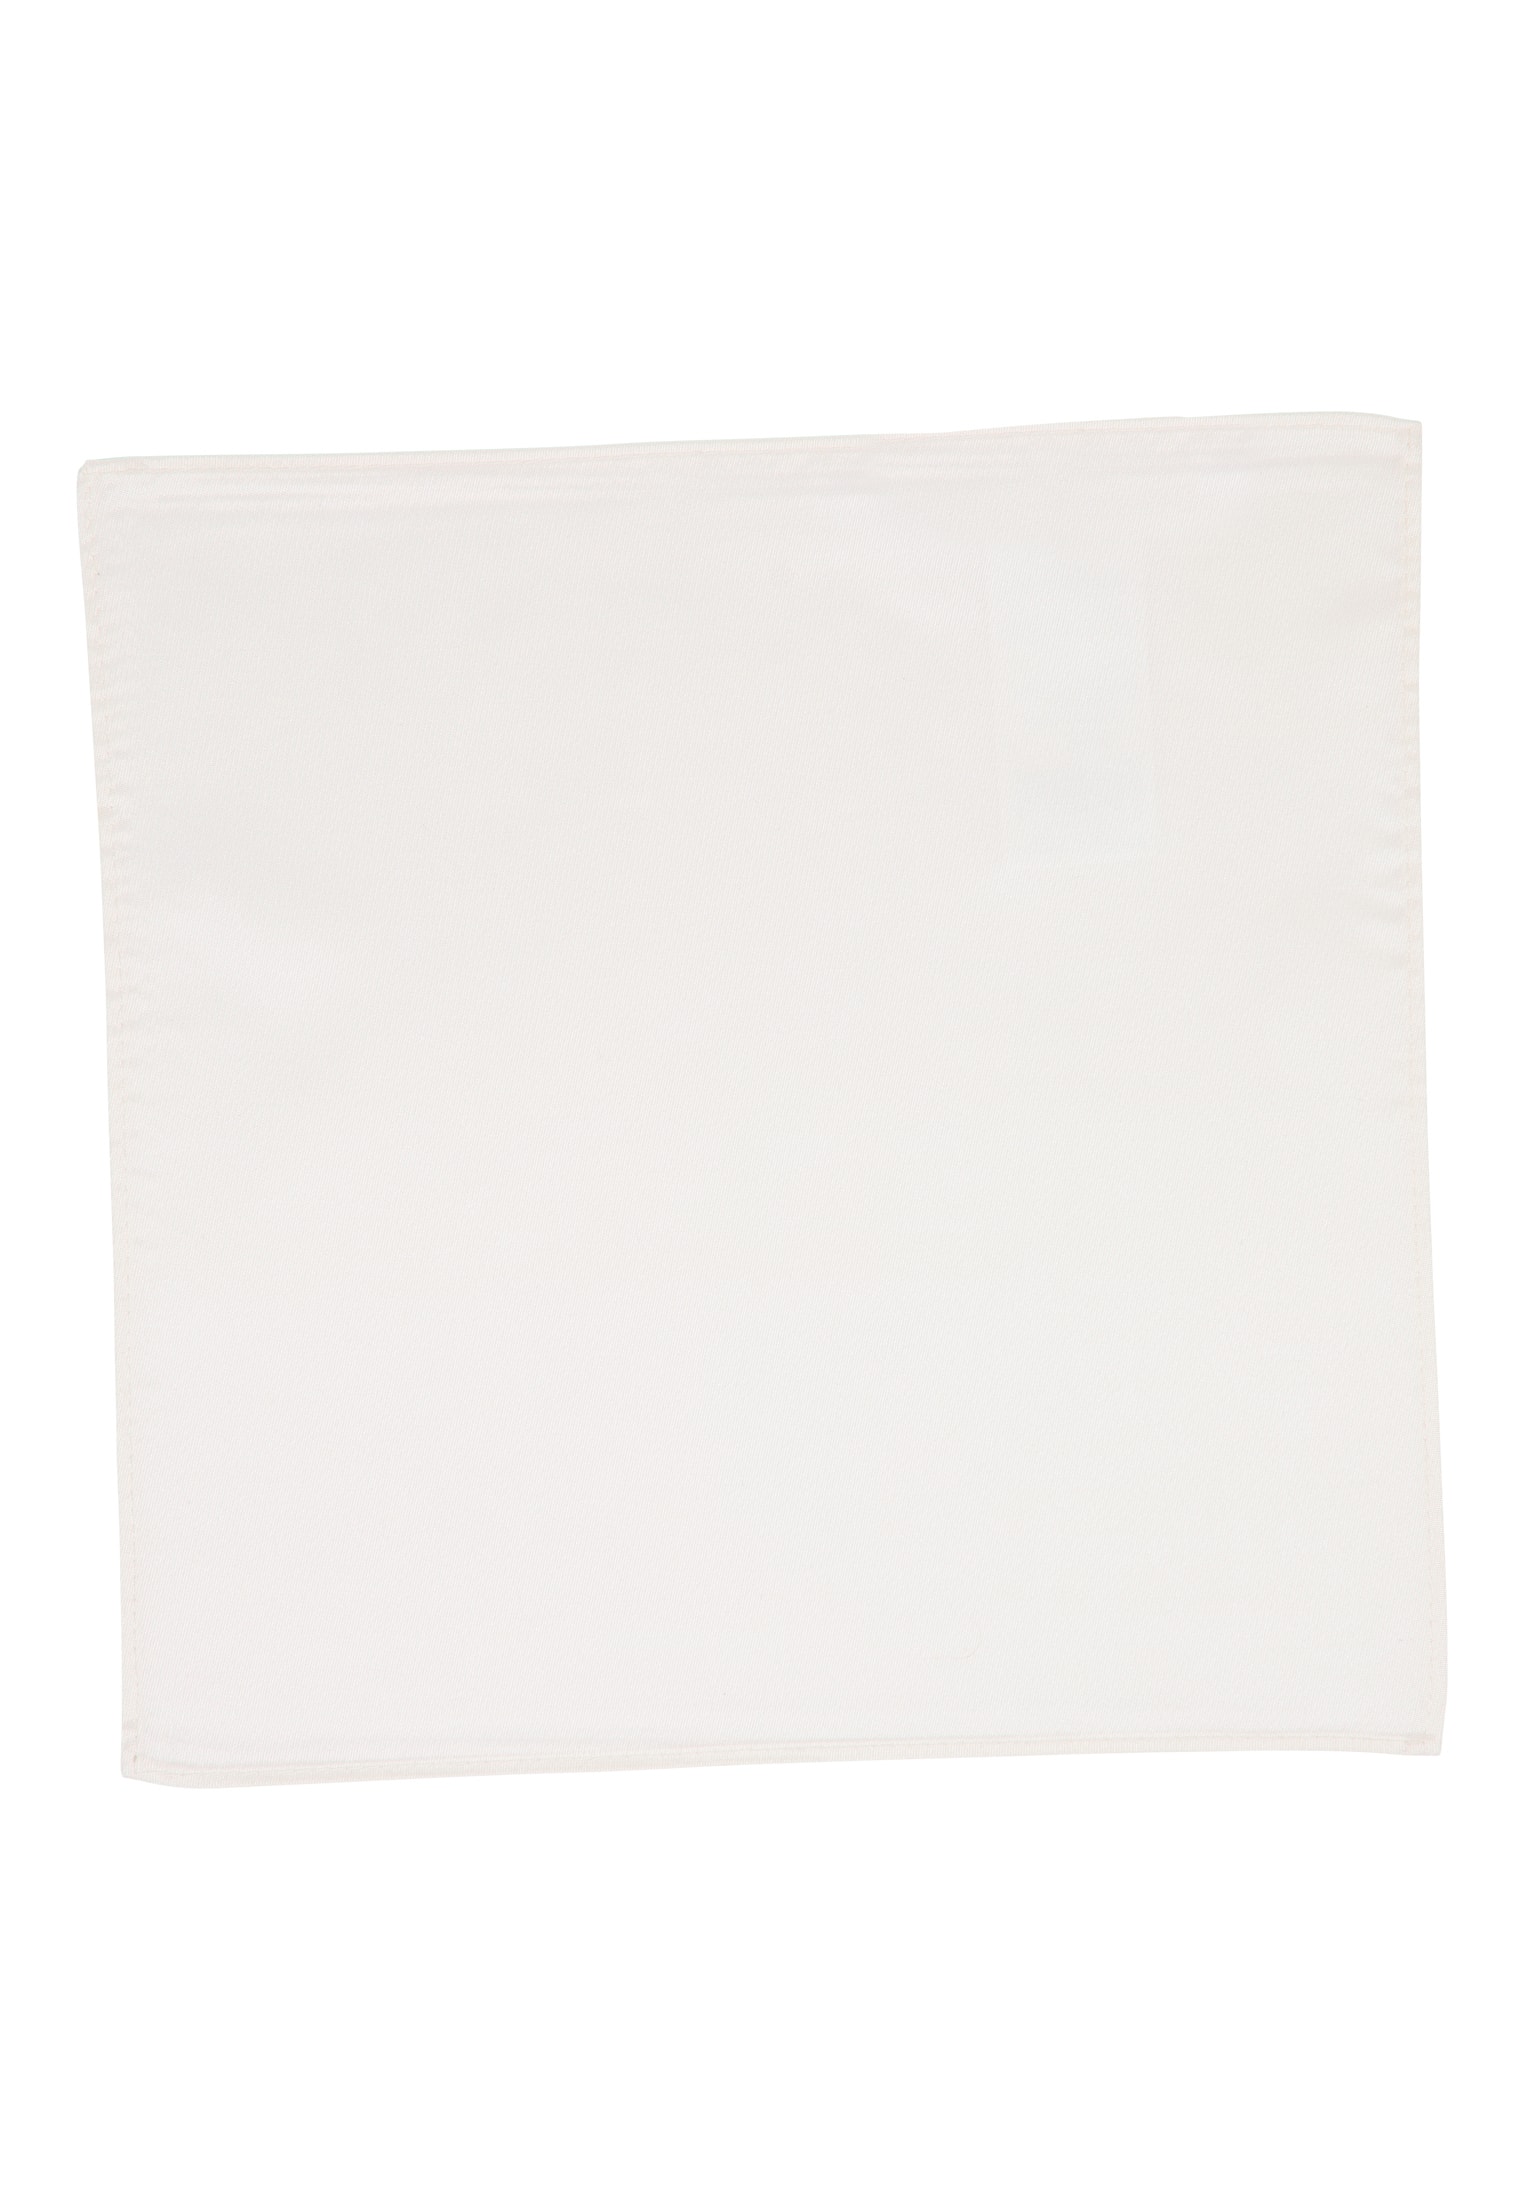 Pocket square in white plain